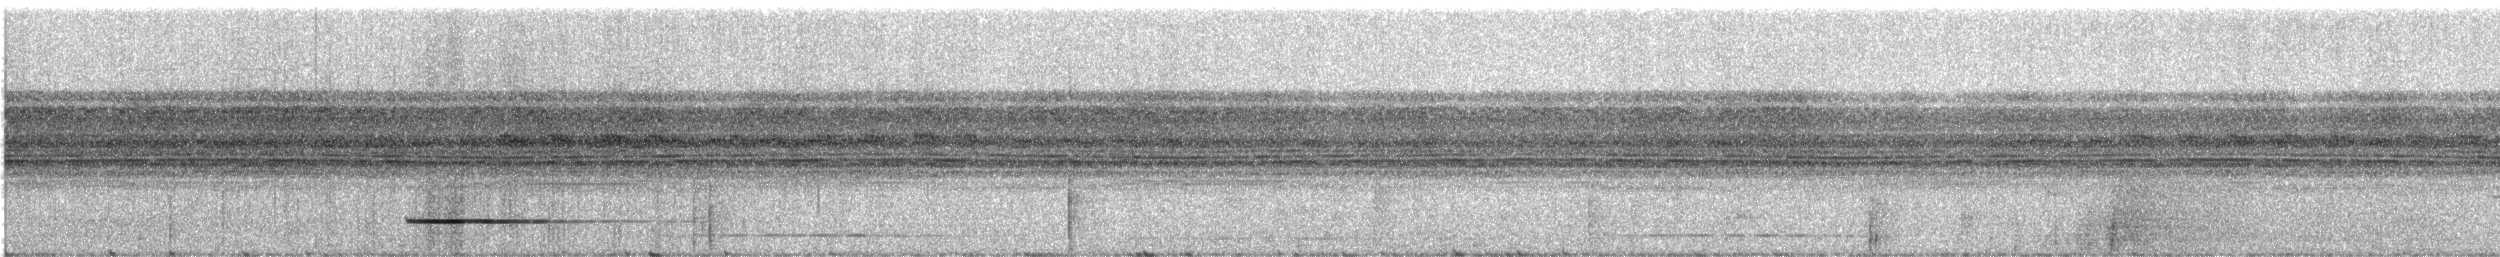 Tinamou de Bartlett - ML243137